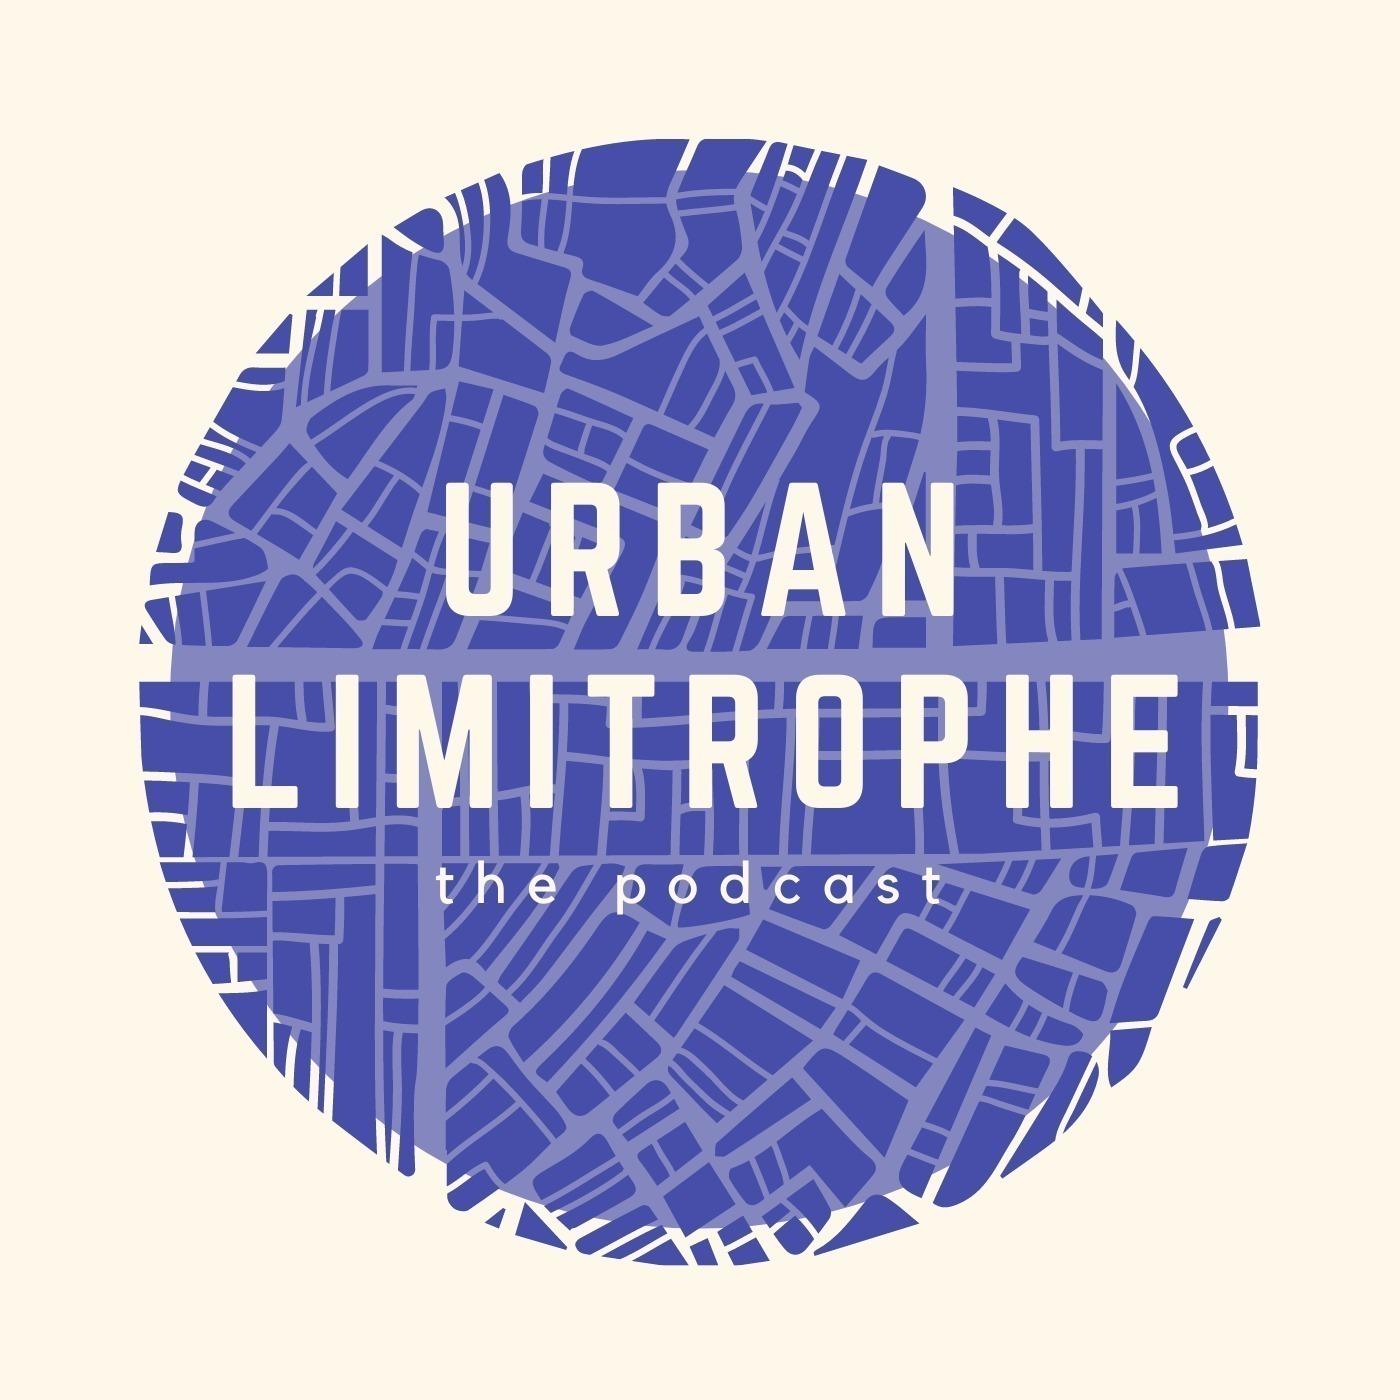 Urban Limitrophe